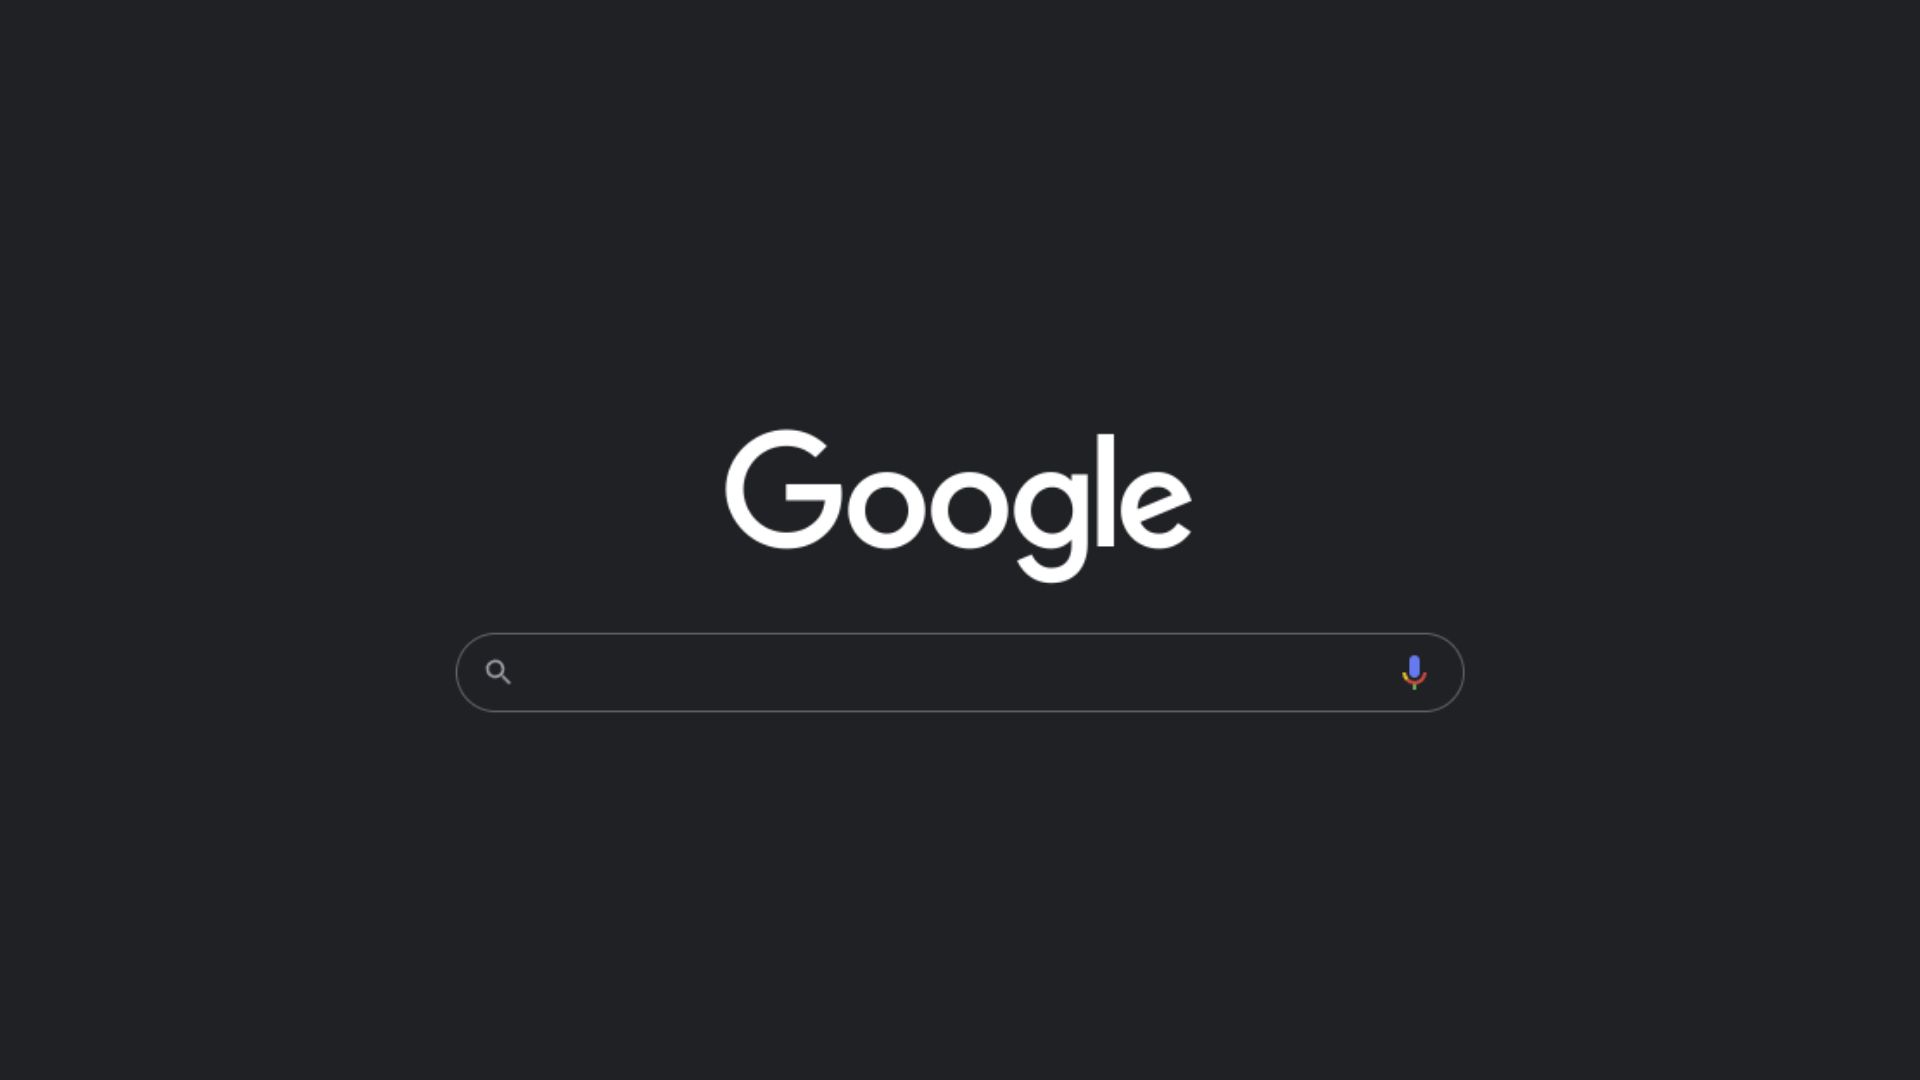 Google's lighter dark theme - it's dark gray with white letters